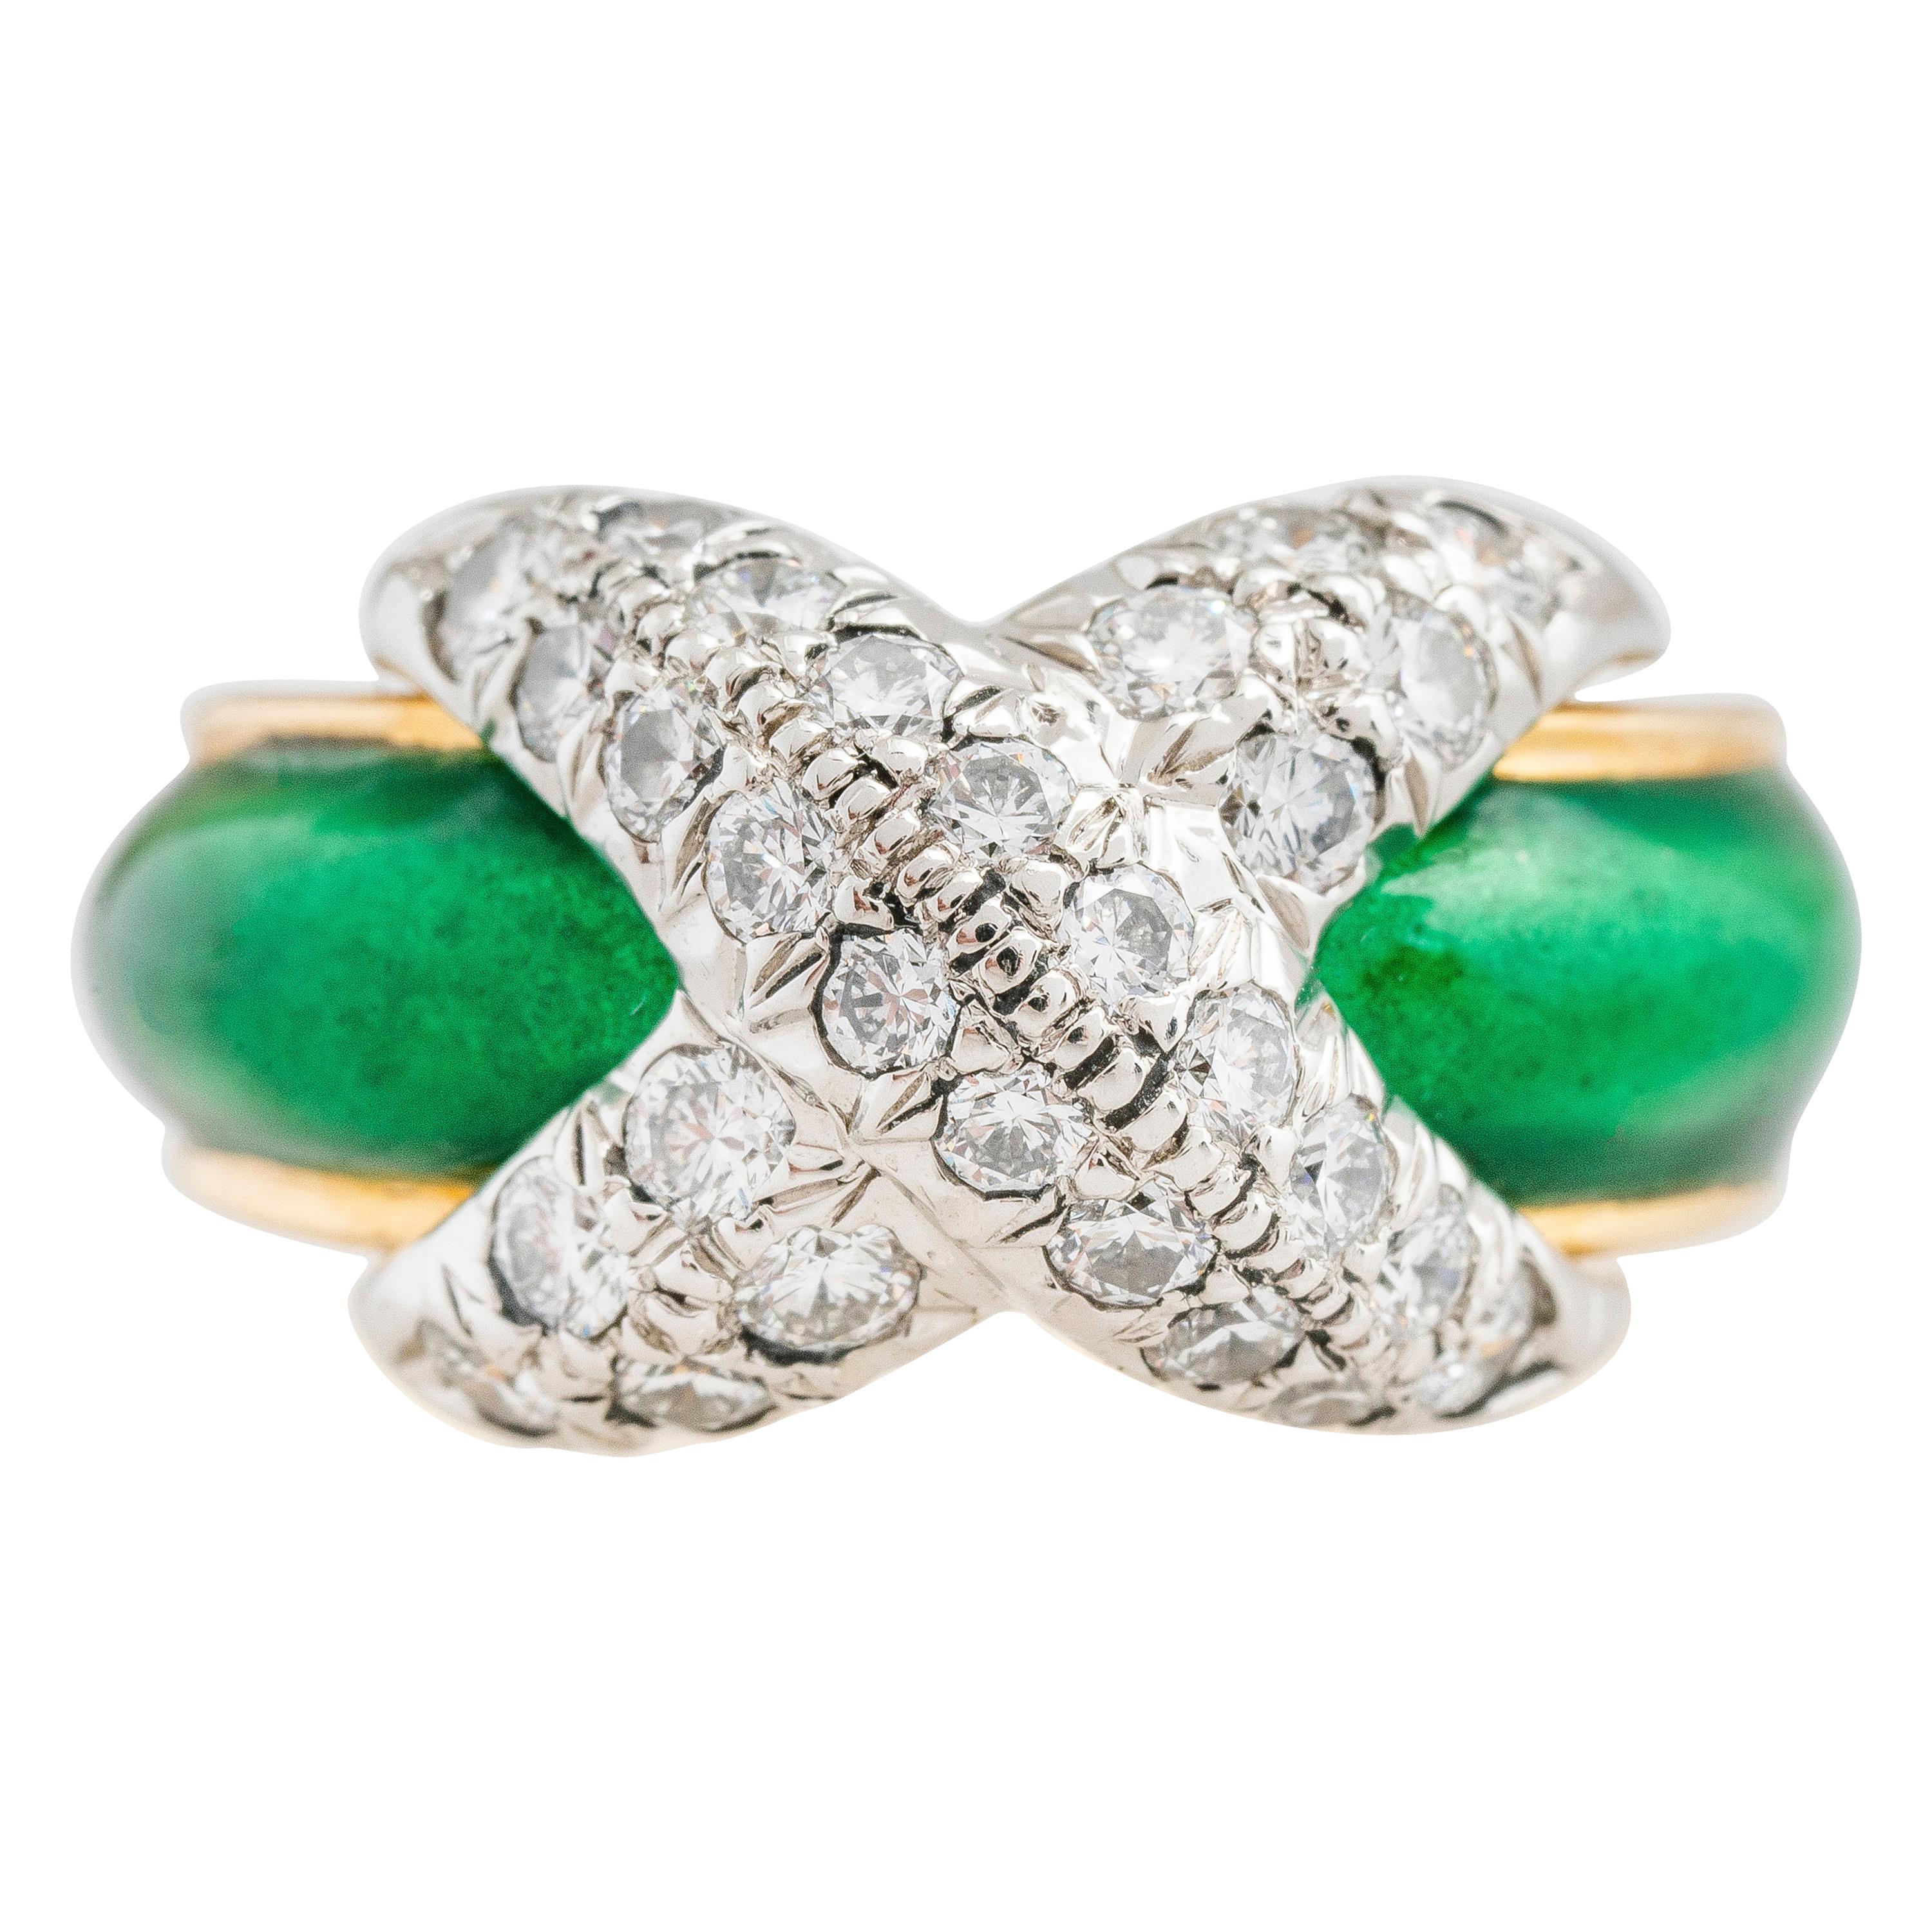 Tiffany & Co. Schlumberger 18ky Diamond and Green Enamel X Ring